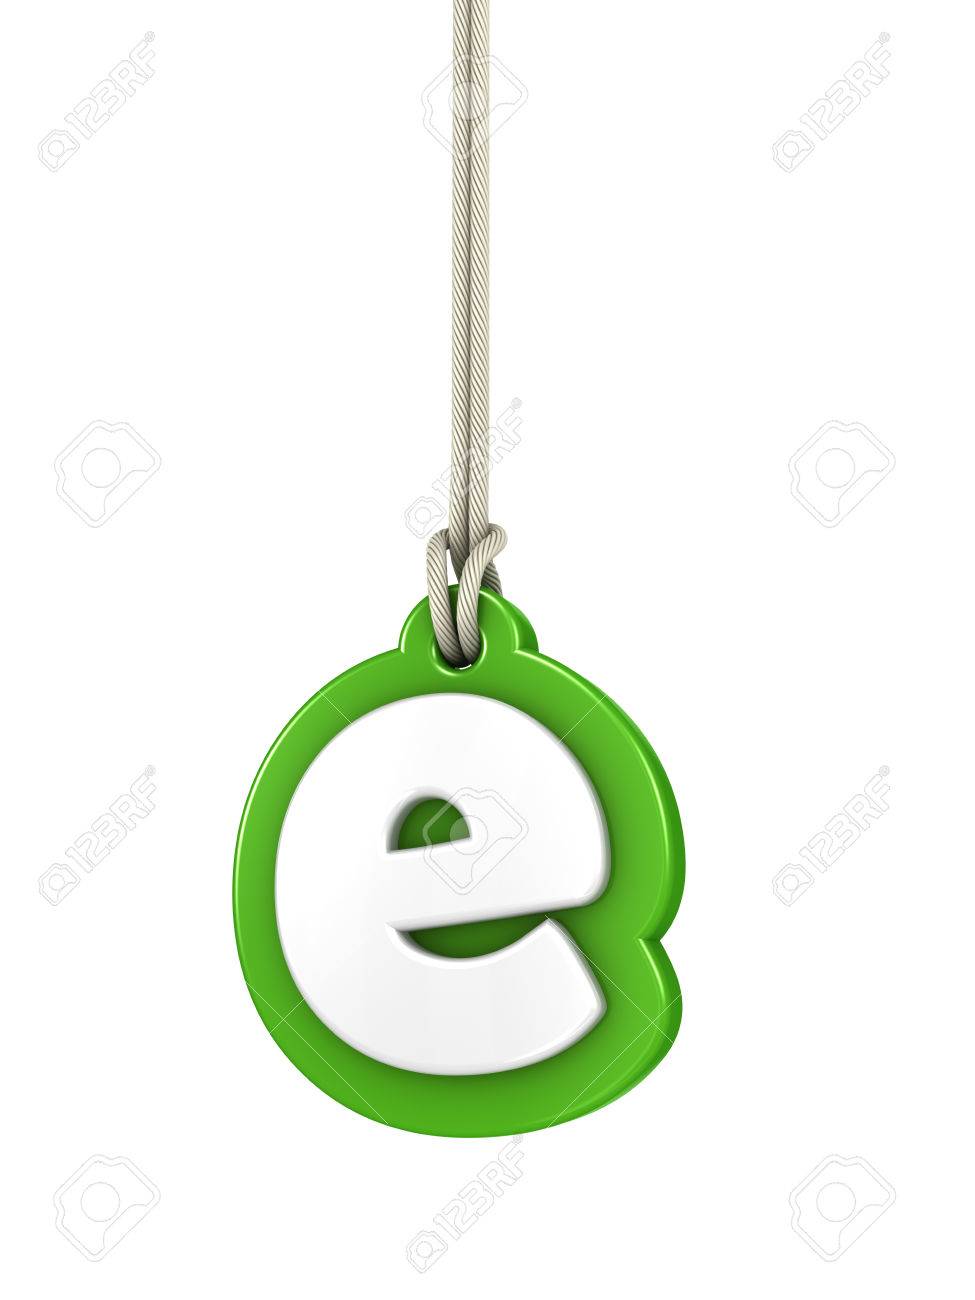 Green lowercase letter e hanging